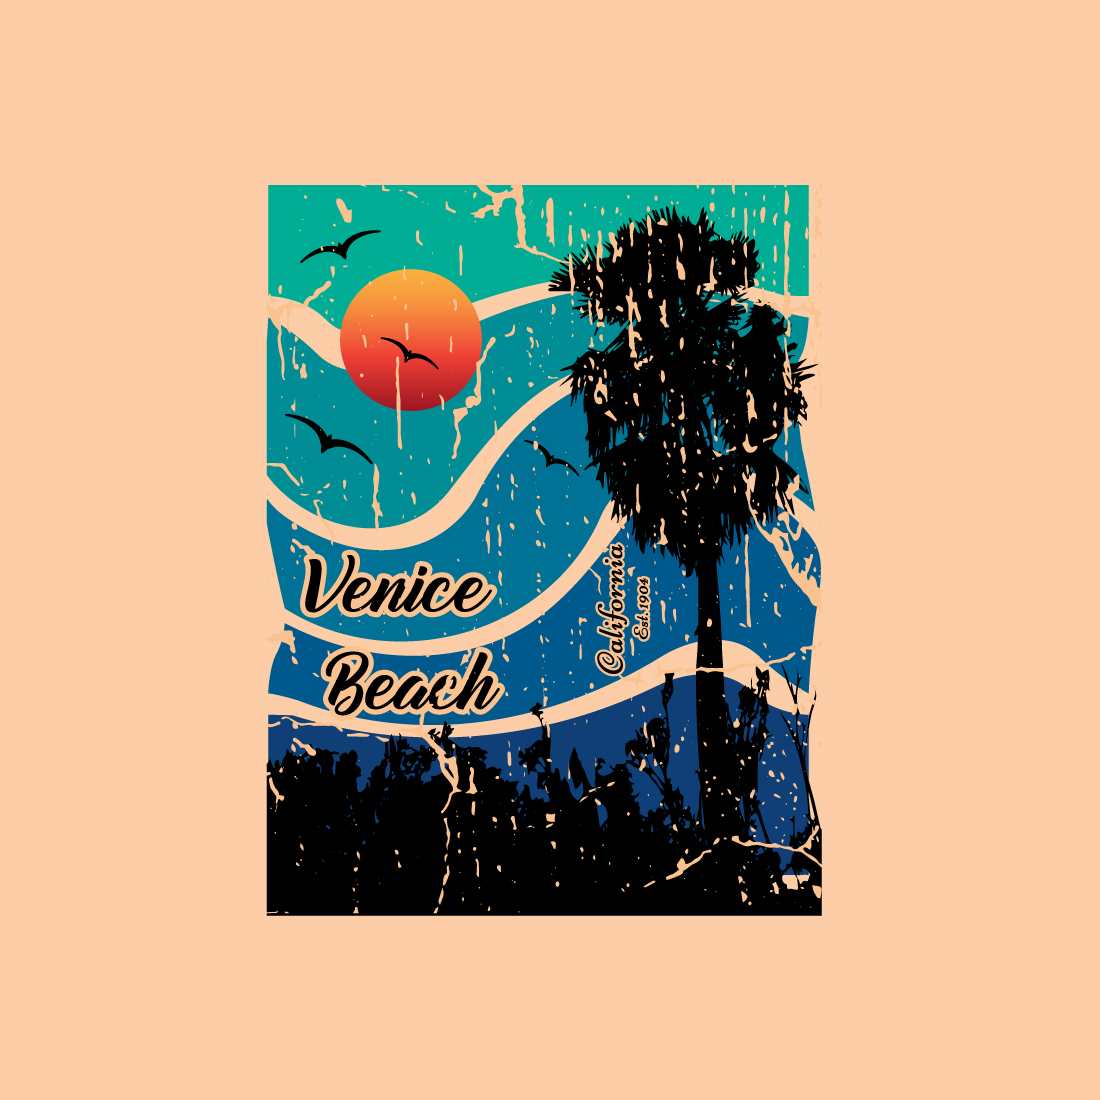 Venice beach, California, surfing boat, palm tree shirt design, print design, summer fashion grunge effect, preview image.